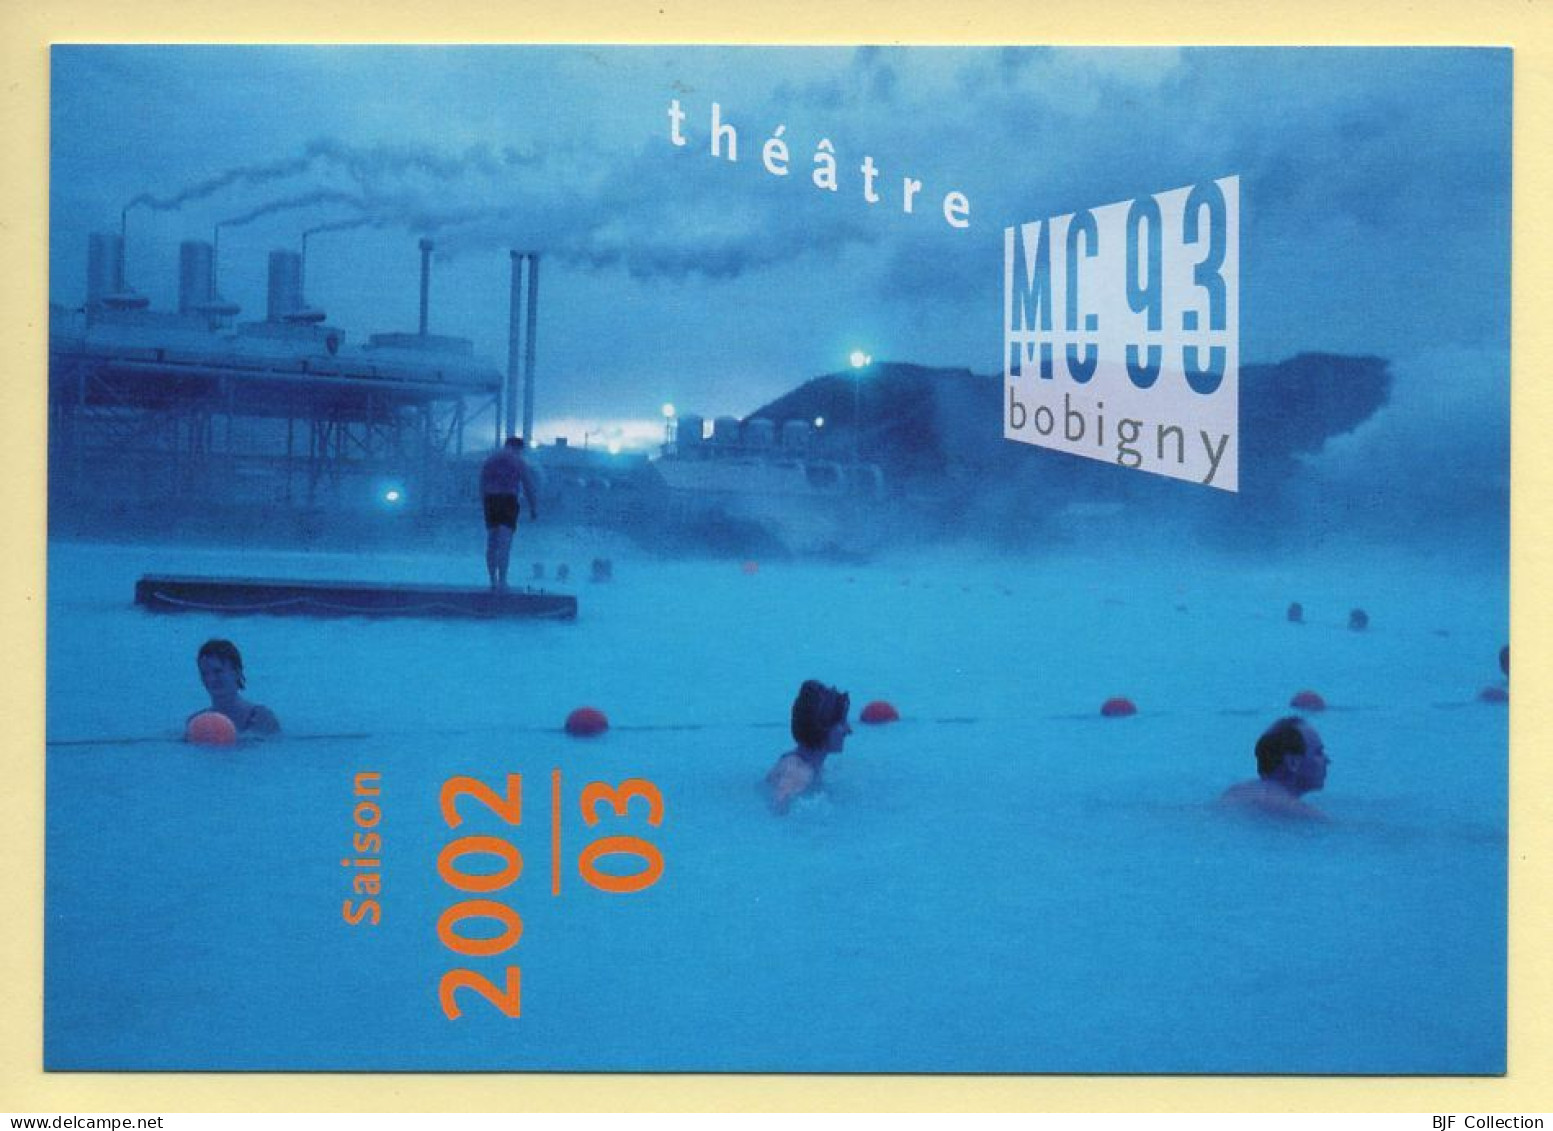 Théâtre MC93 Bobigny / Saison 2002-2003 / Théâtre - Theater